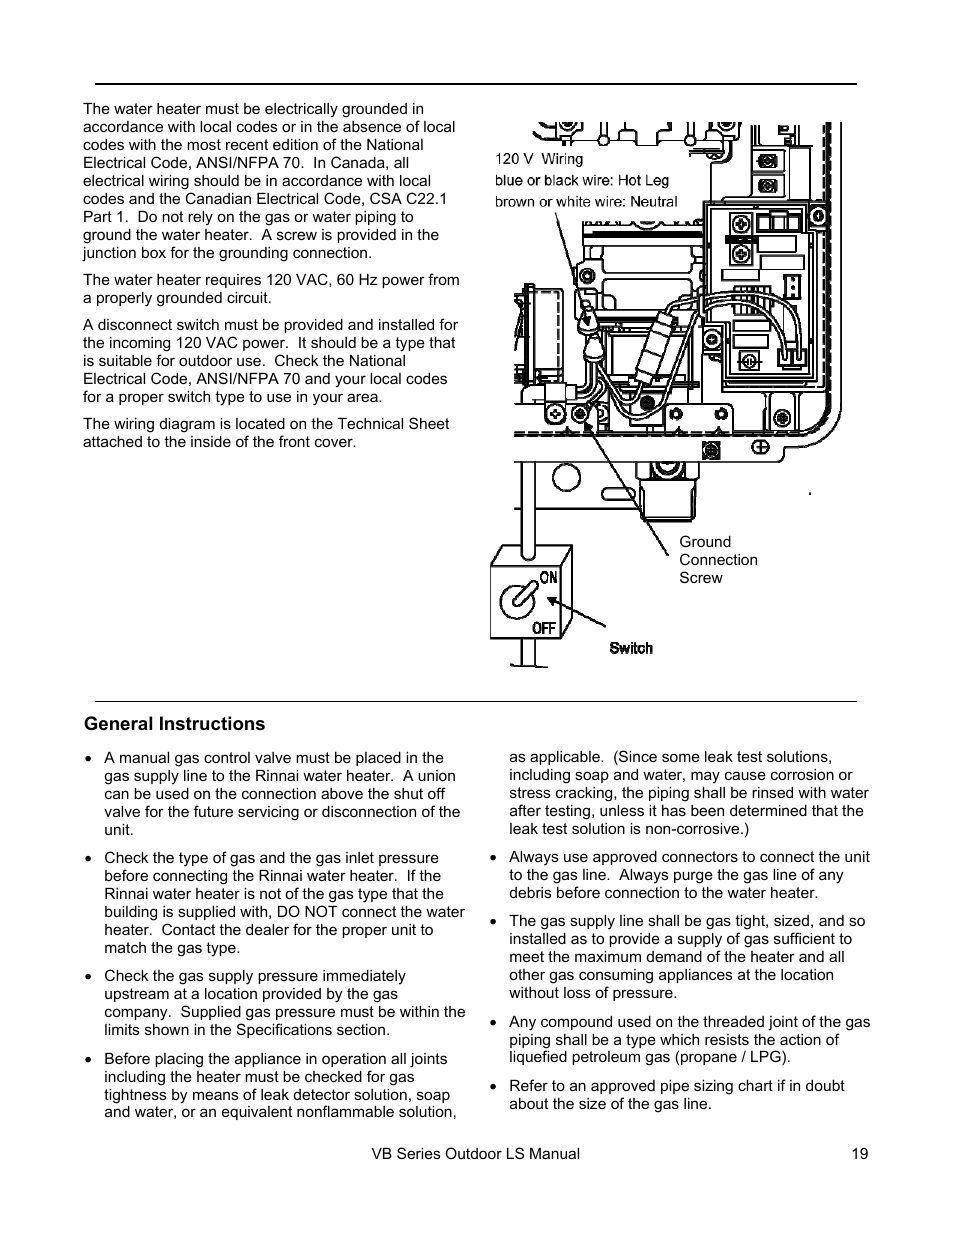 Rinnai RL75E User Manual | Page 19 / 60